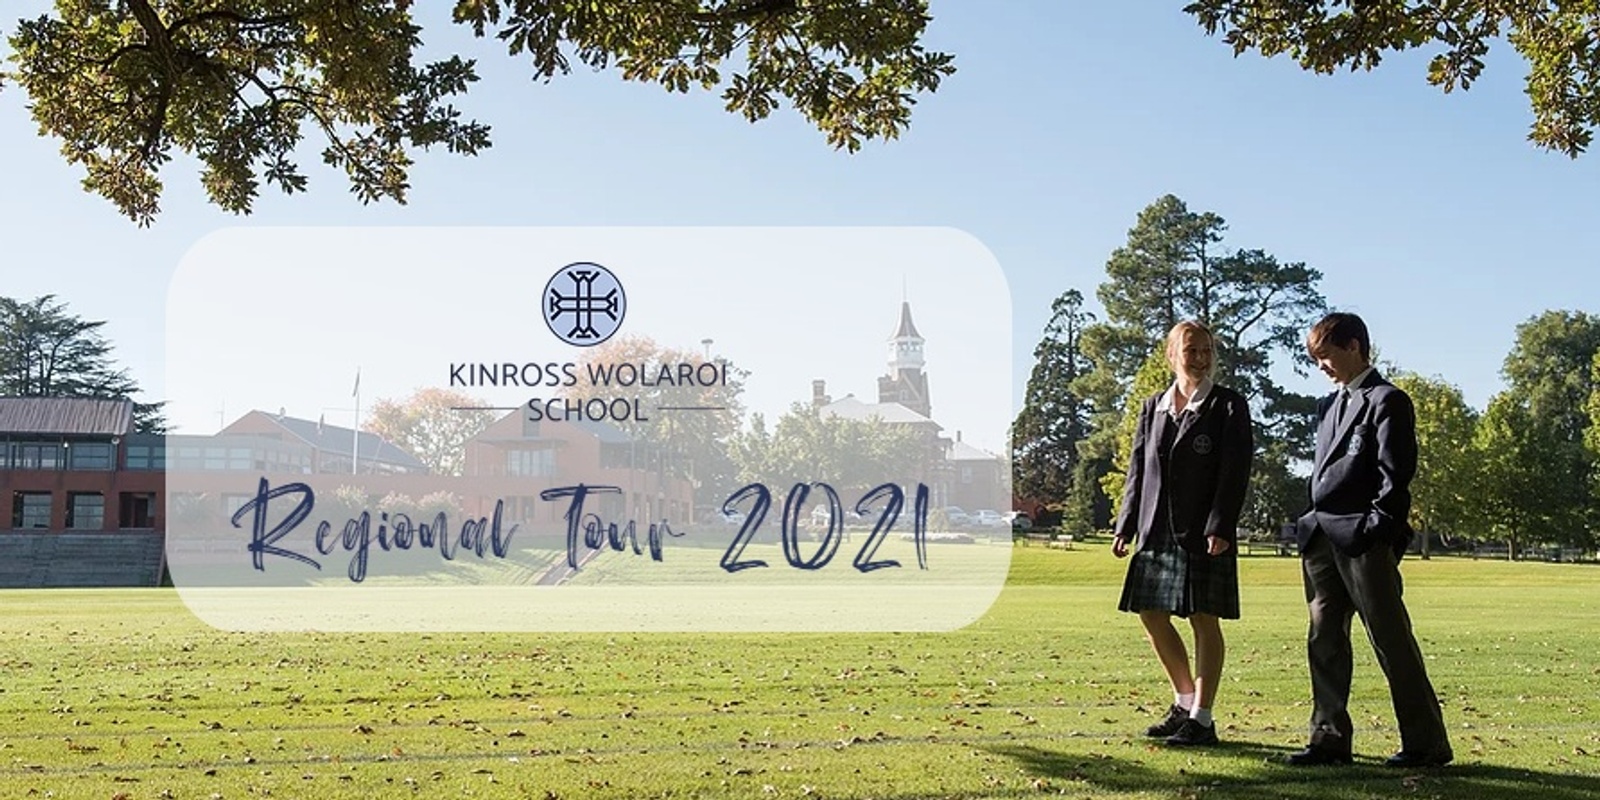 Banner image for KWS Regional Tour 2021 - Southern Highlands